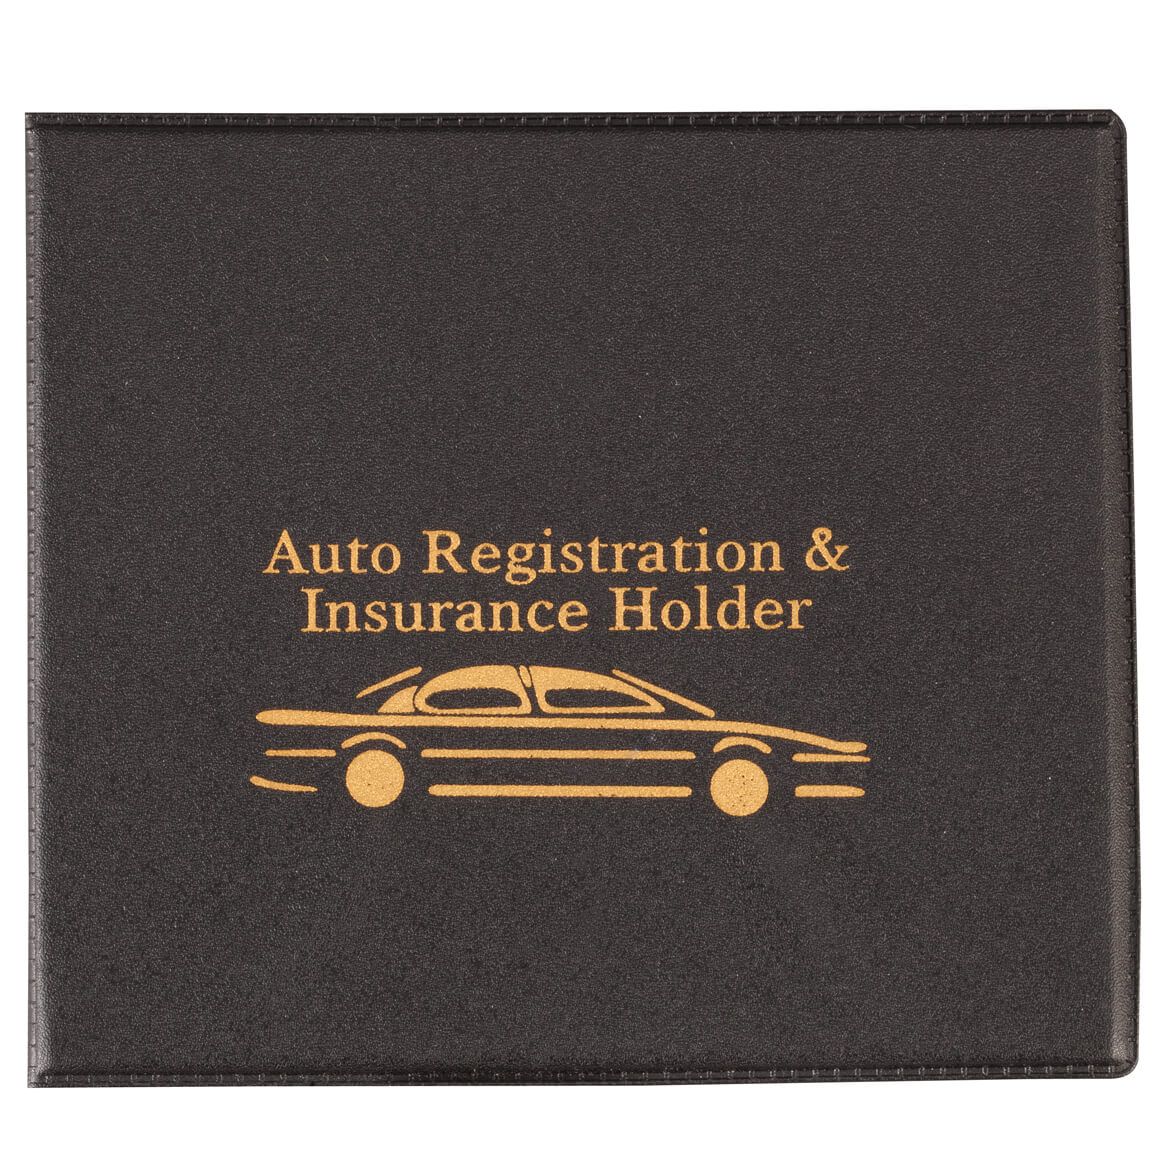 Auto Registration & Insurance Holder + '-' + 360316